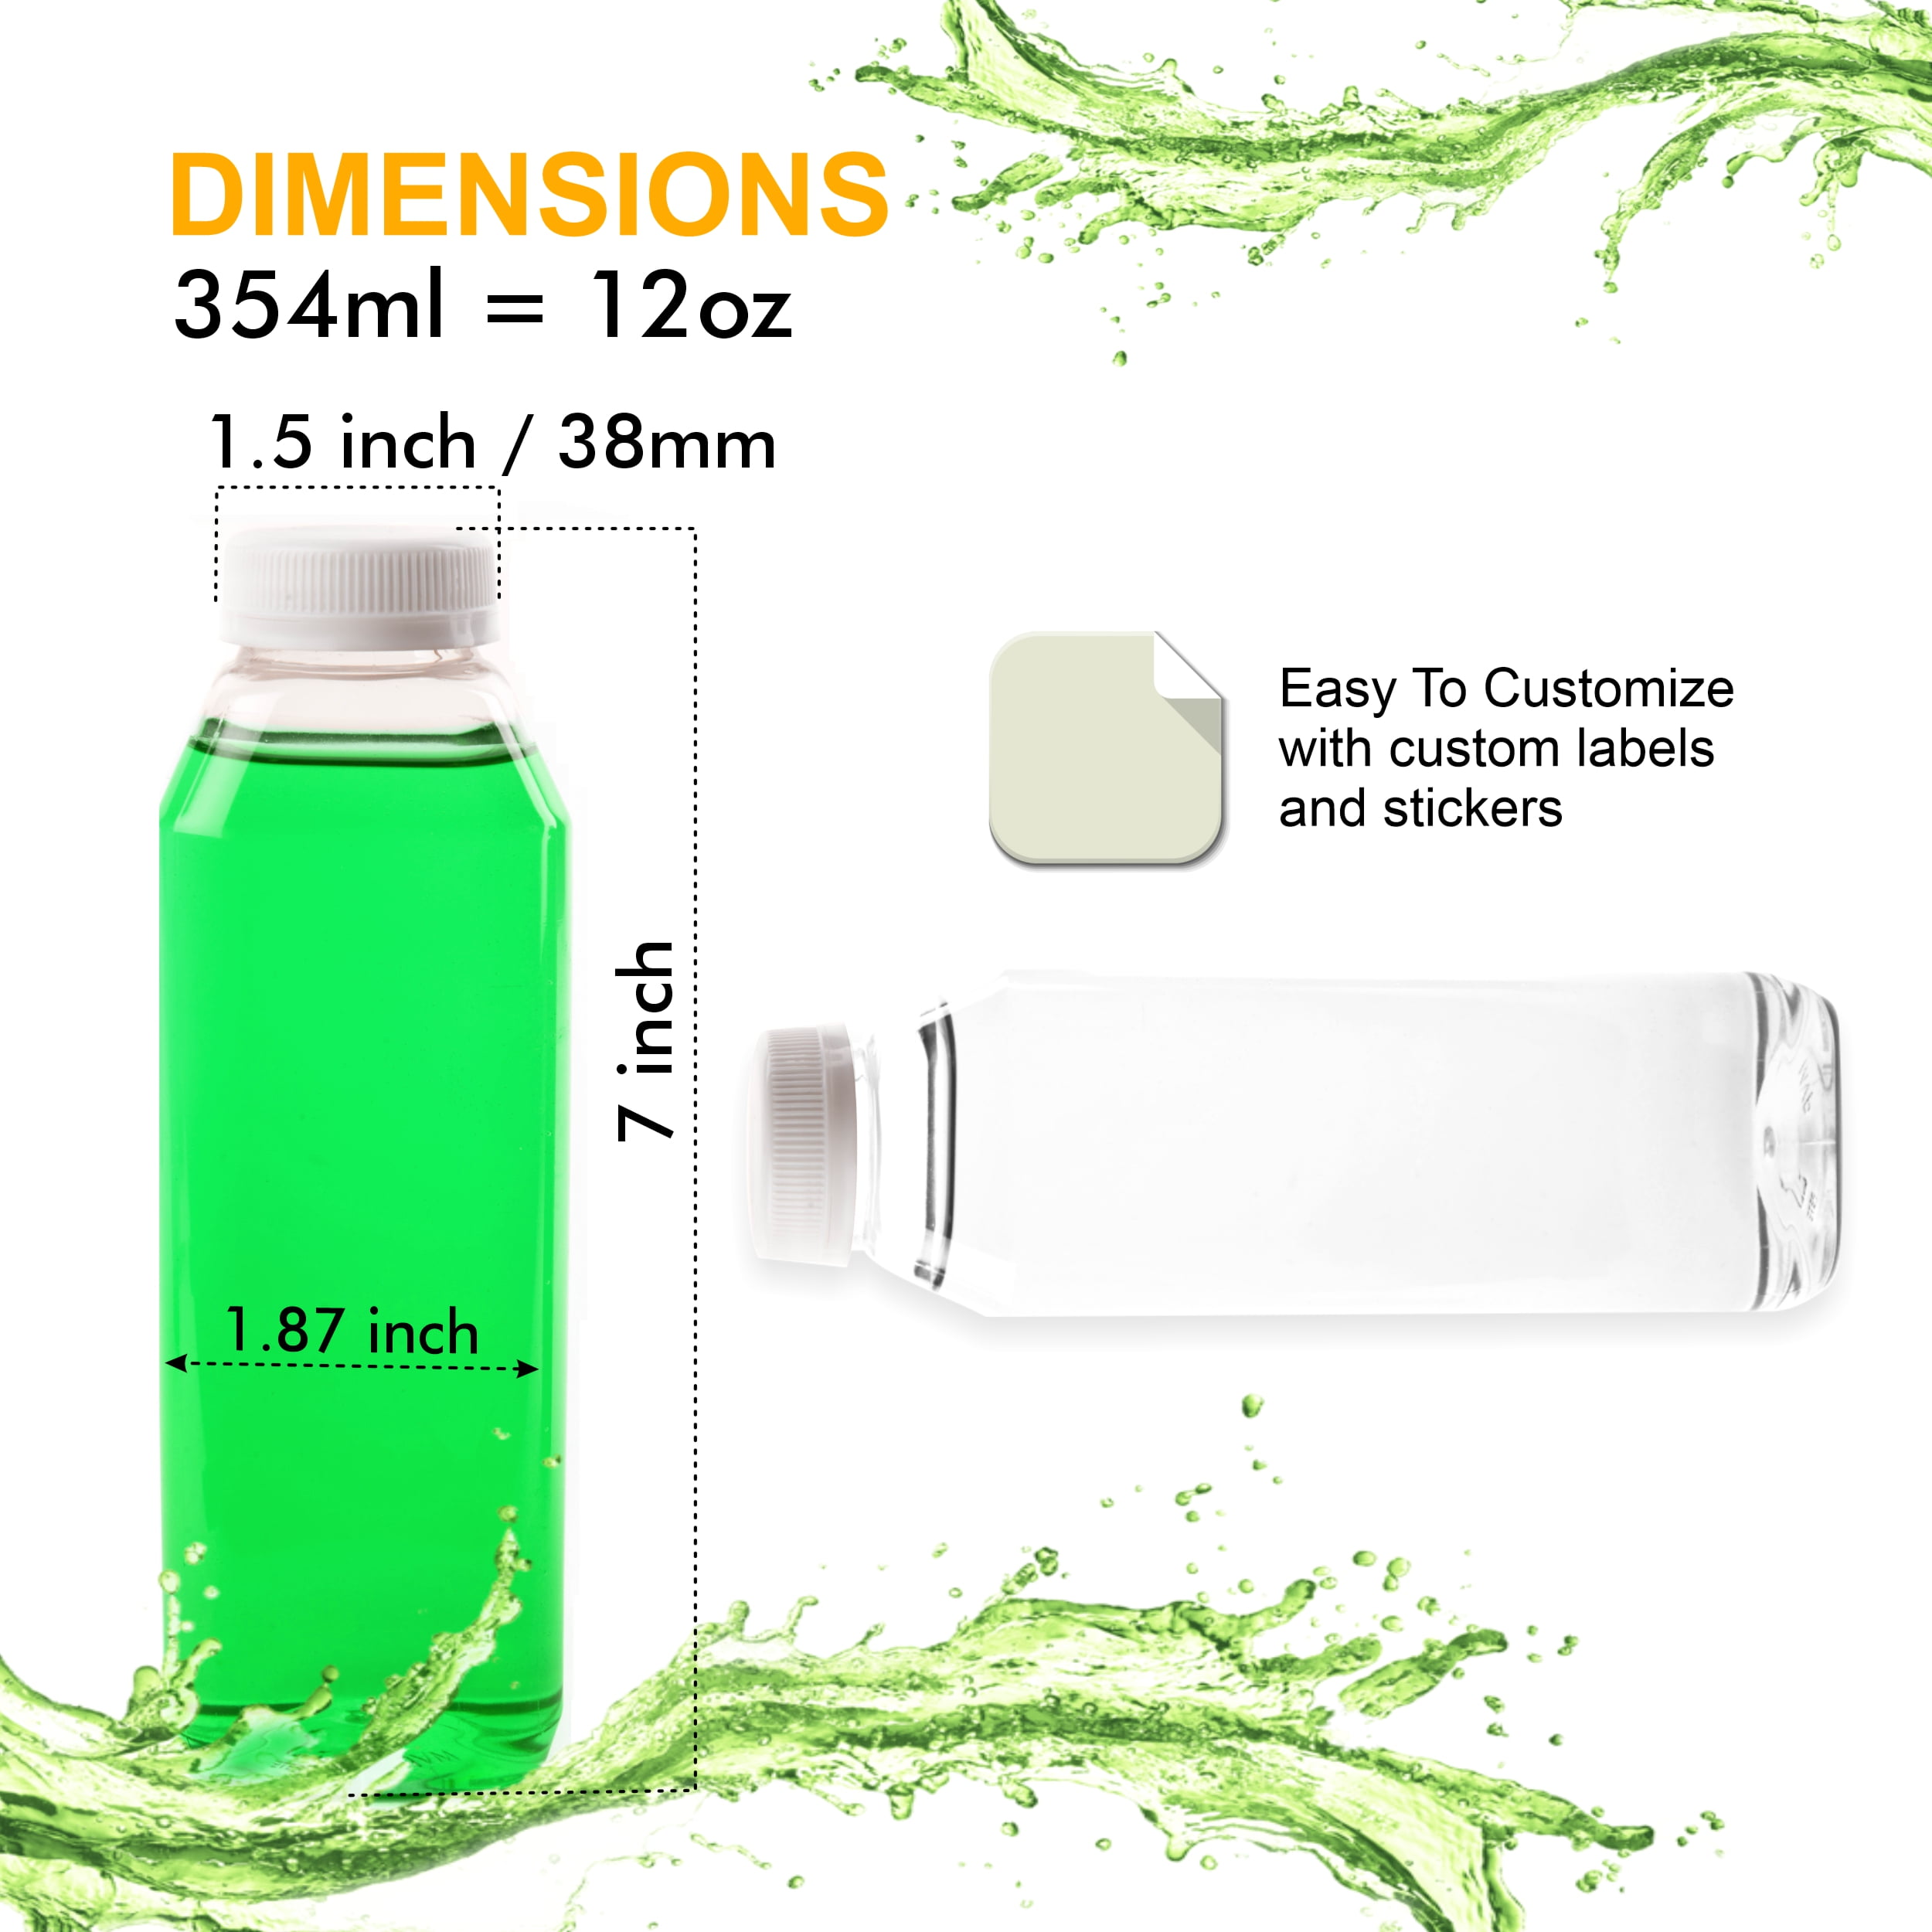 Translucent Plastic 128 Oz Juice Bottle - 5 5/8Sq x 10H